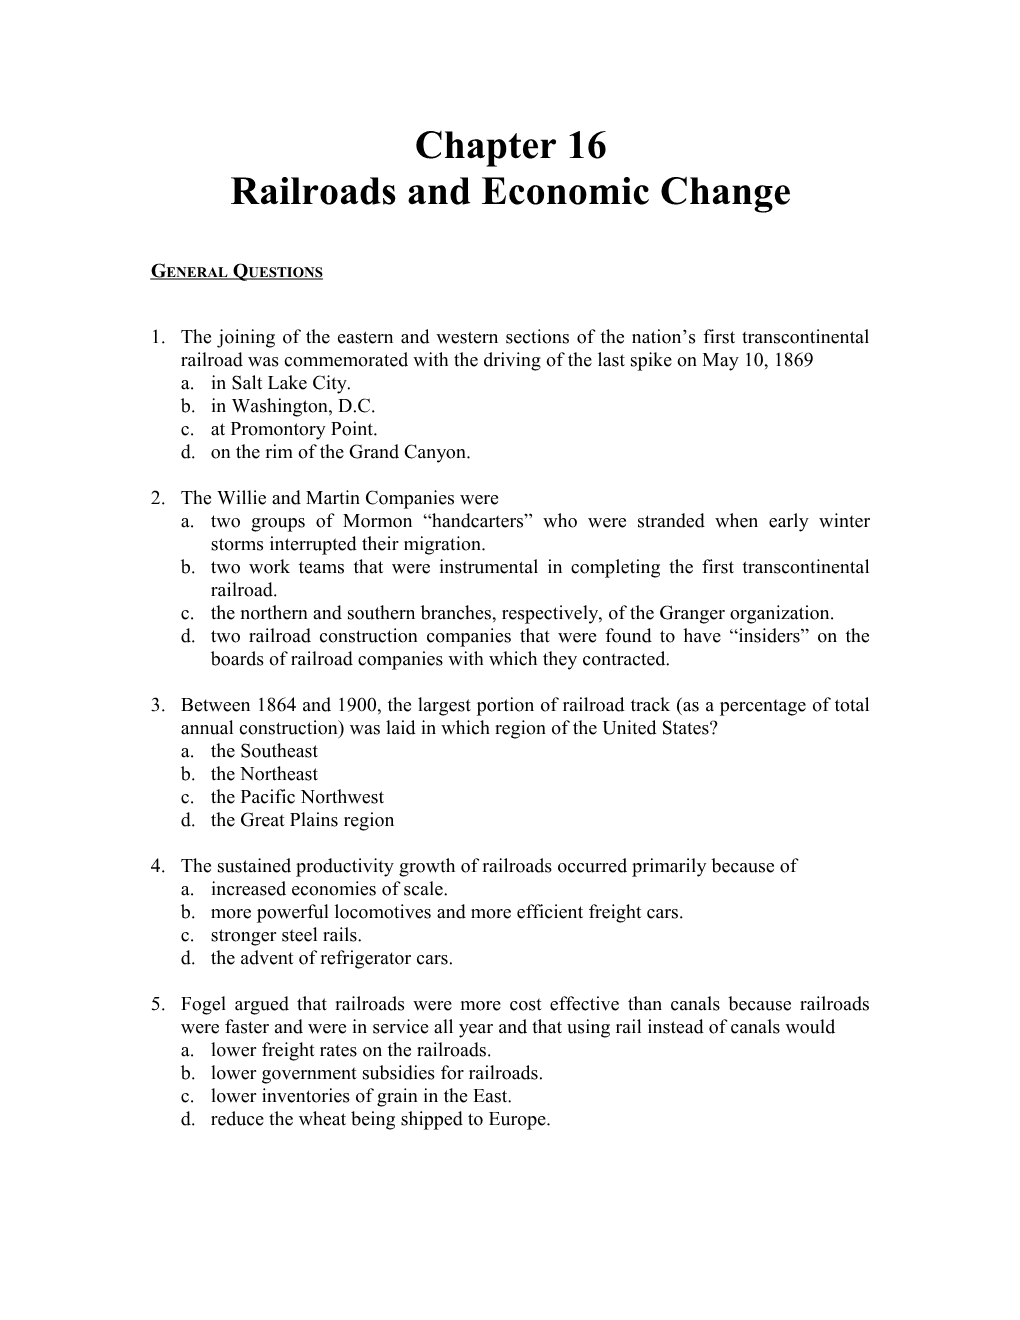 Railroads and Economic Change